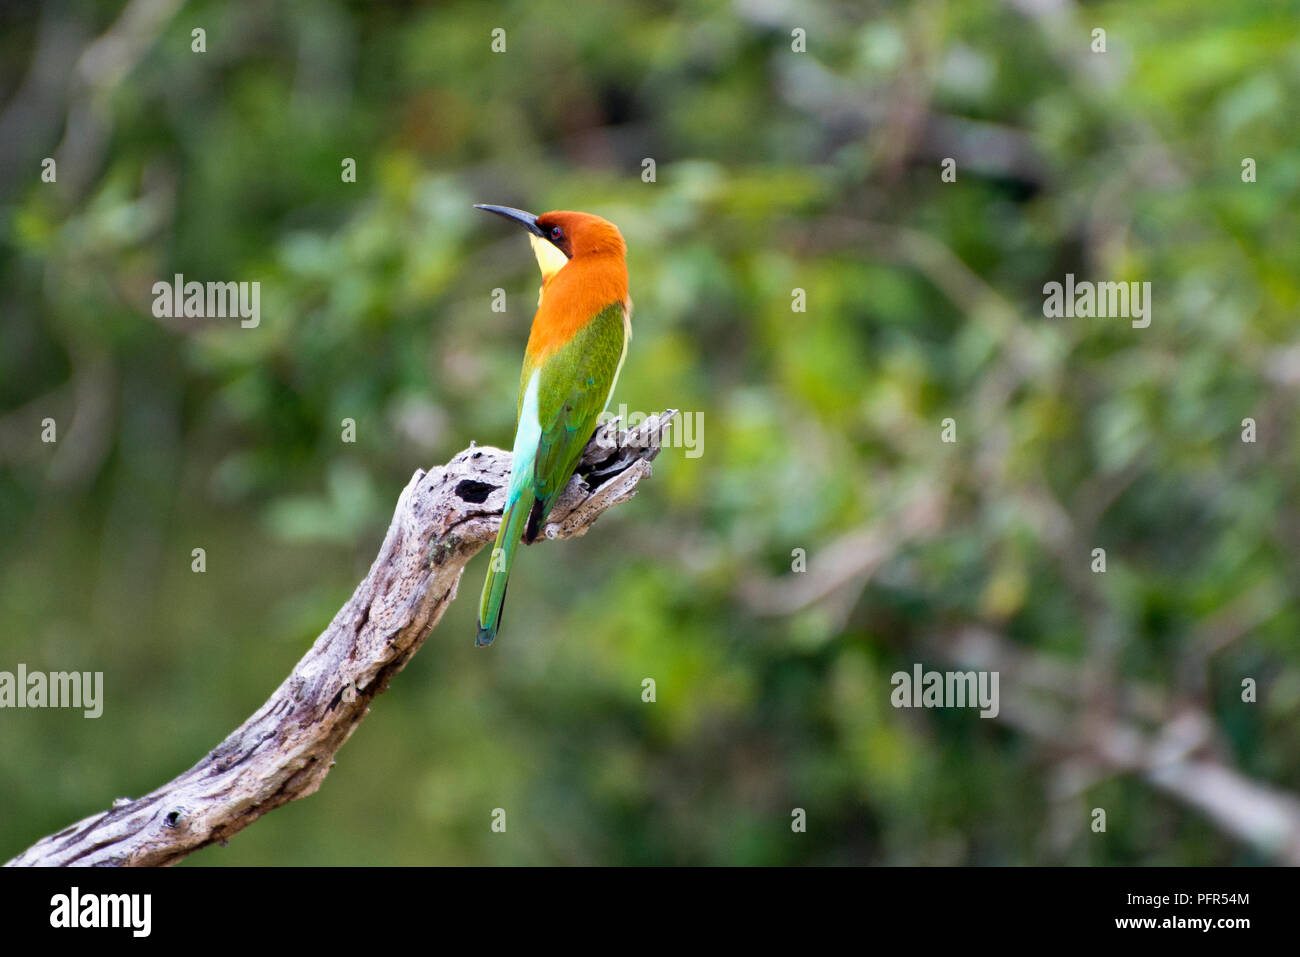 Sri Lanka, al sur de la provincia, Tissamaharama, el Parque Nacional de Yala, donde se posan las aves en rama Foto de stock